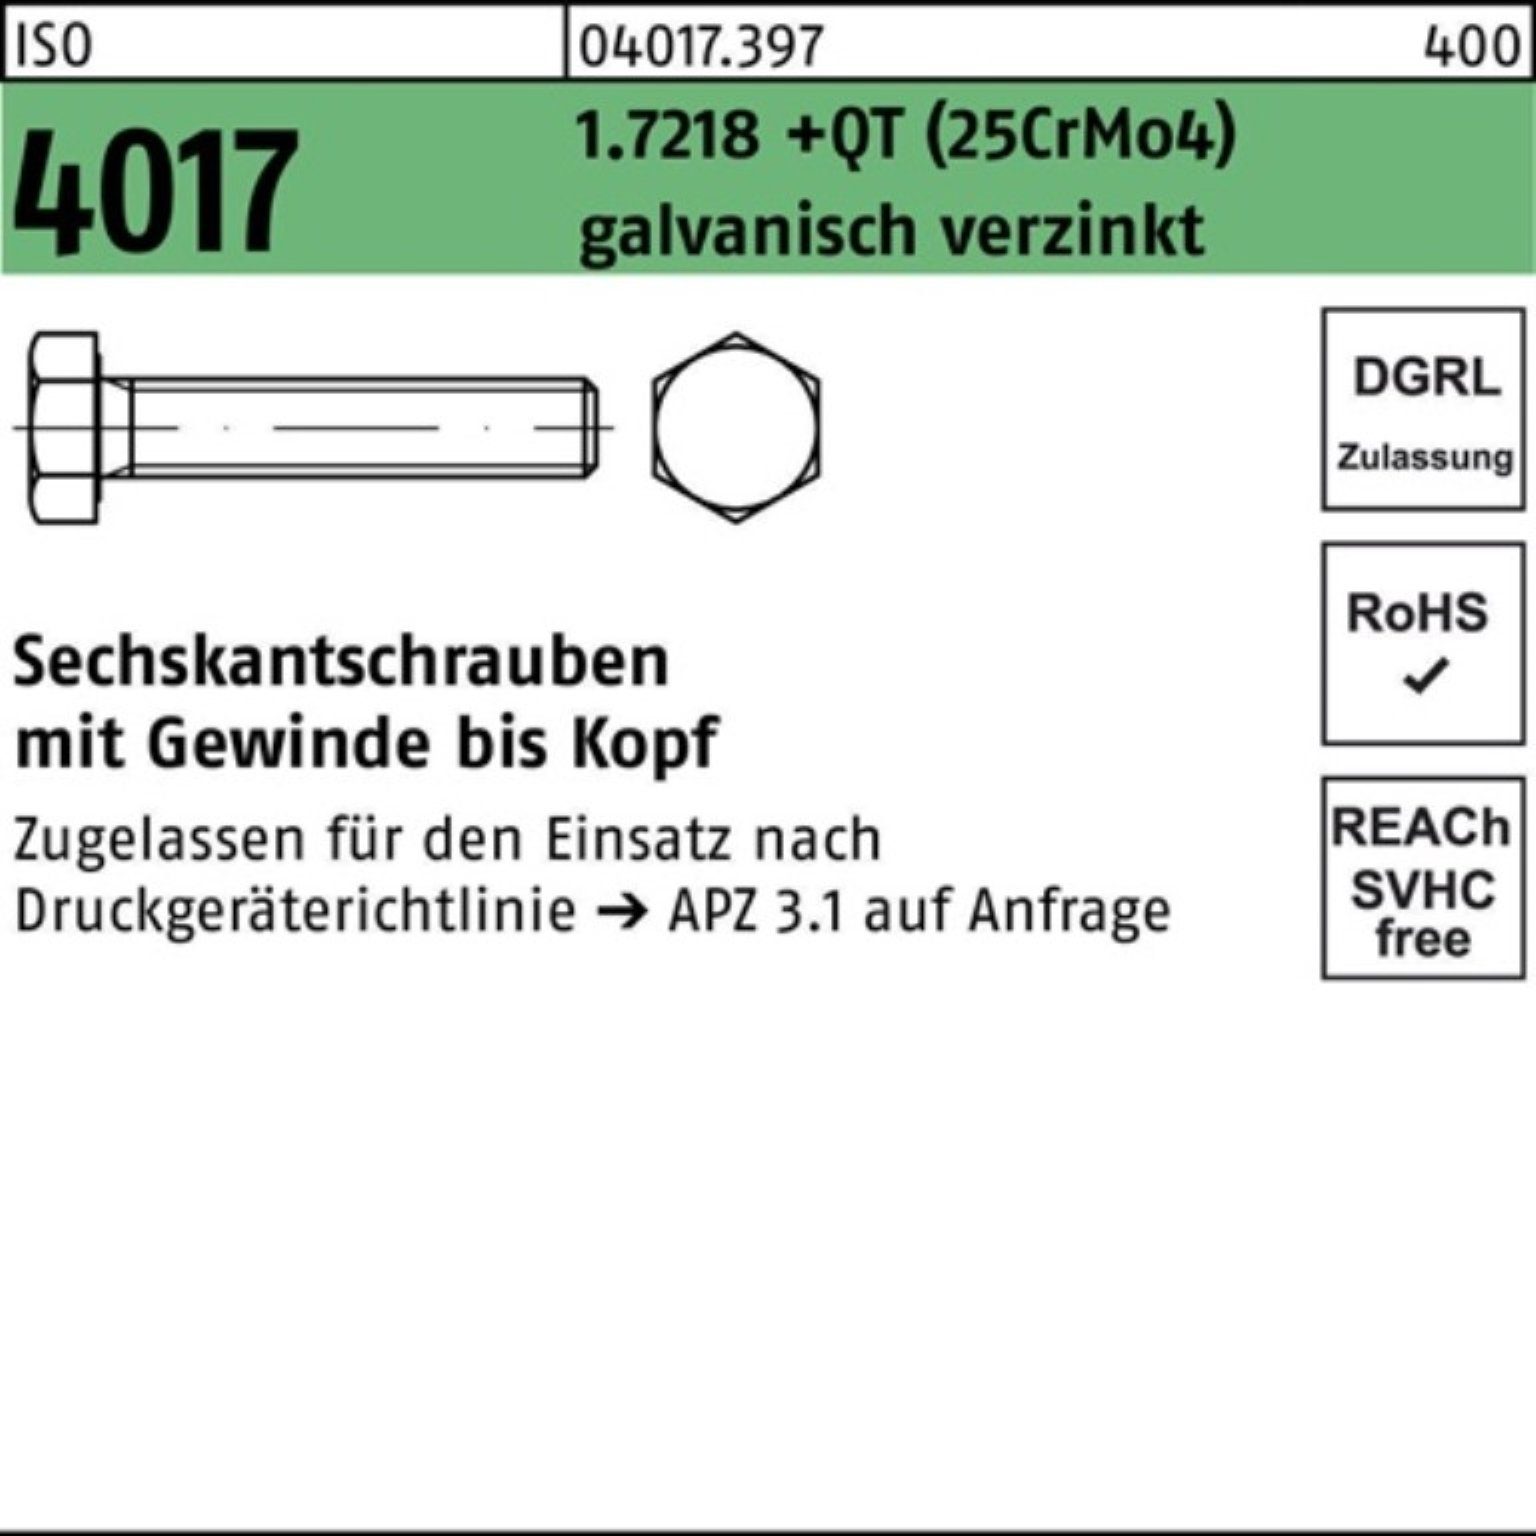 Bufab VG Sechskantschraube 100er Sechskantschraube Pack +QT 1.7218 (25CrMo4) 4017 ISO M20x45 g